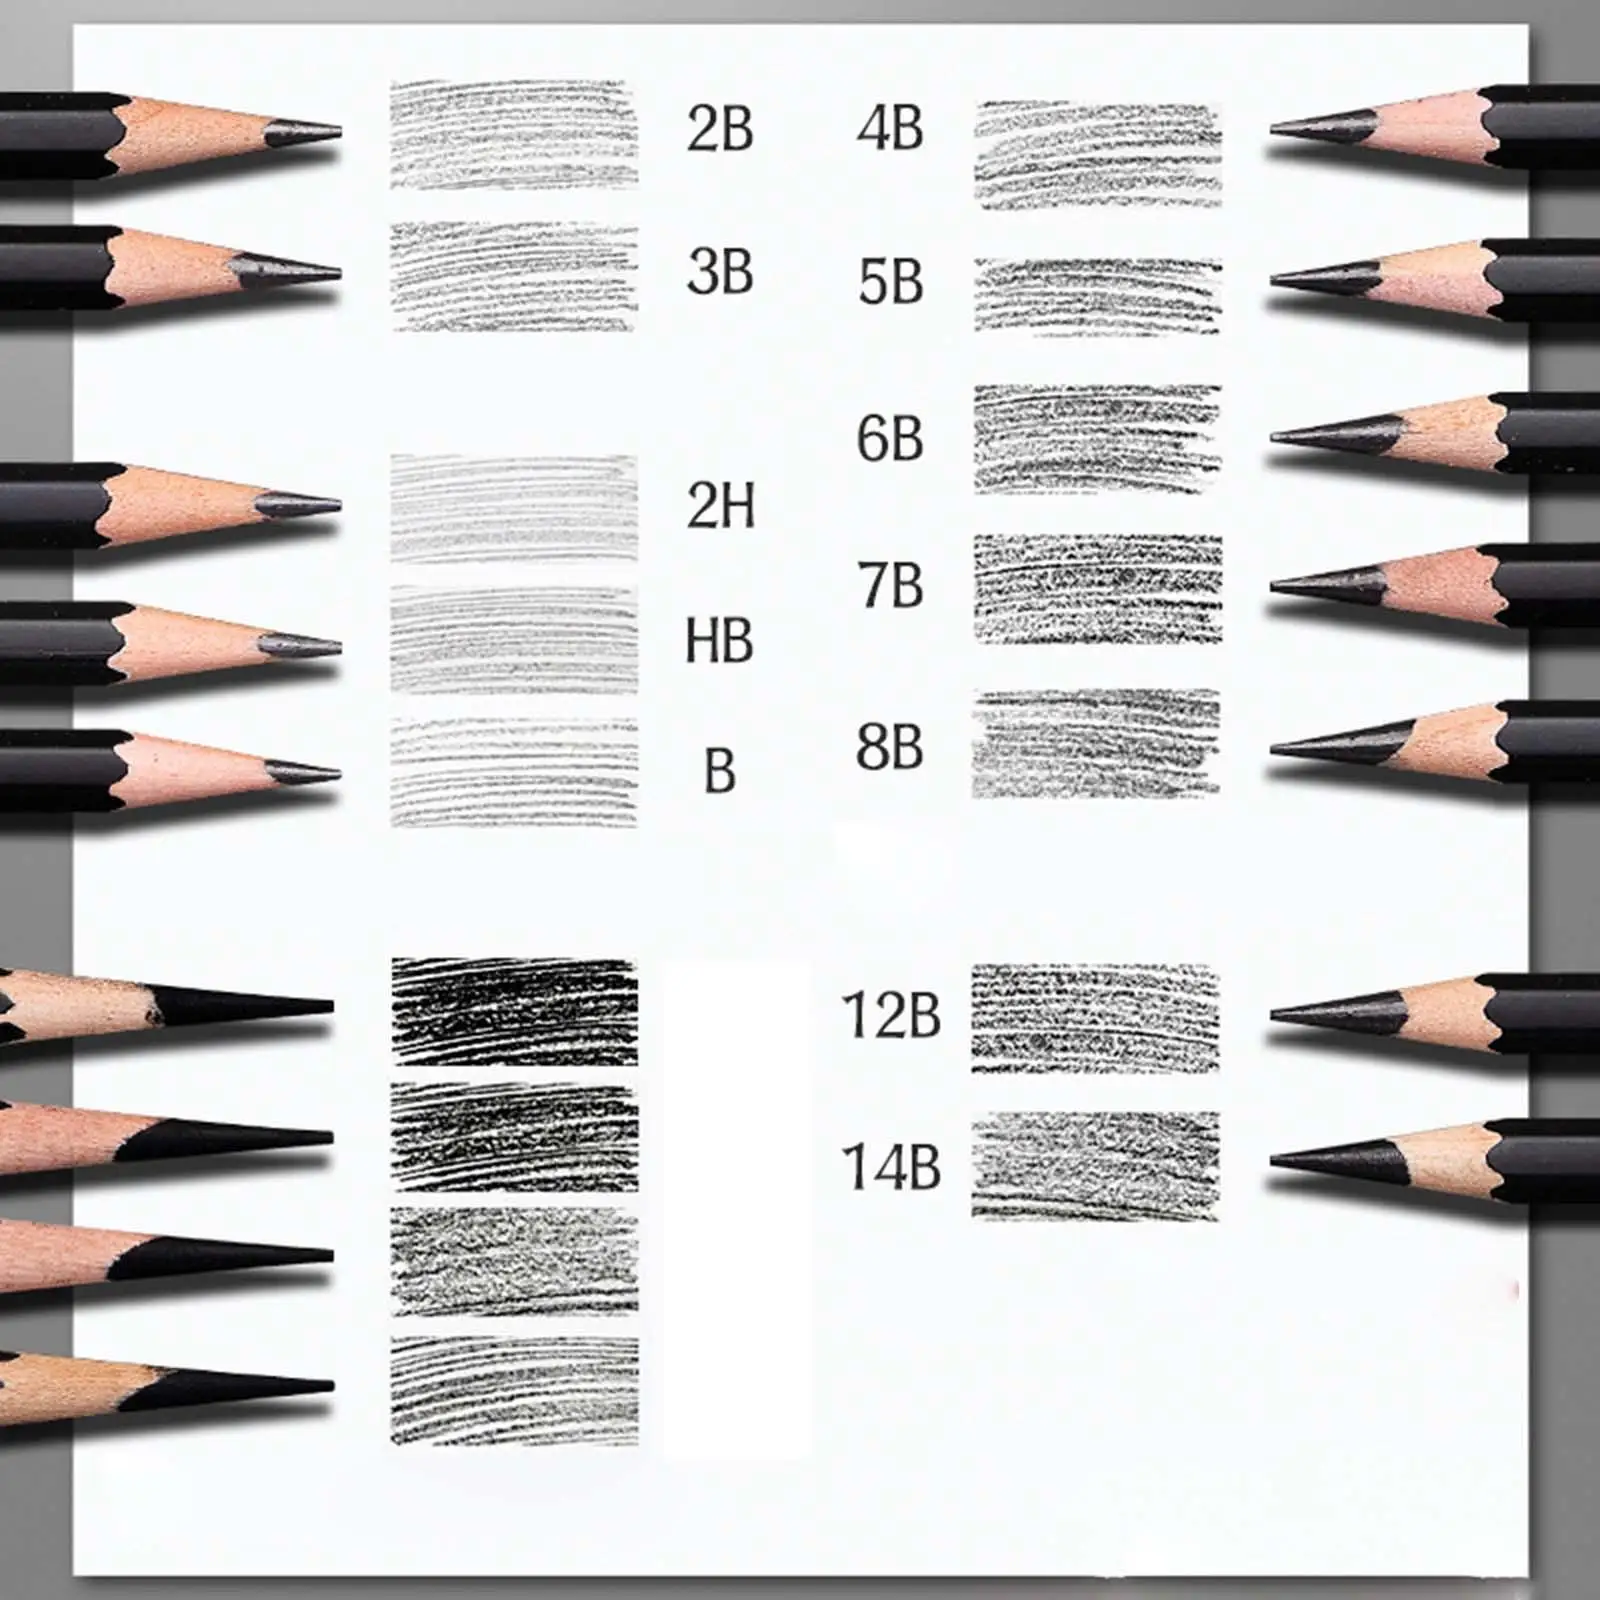 Sketching Drawing Set Mulifunction Art Painting Set Erasers Pencil Drawing Set for Art Sketch Writing Correction Revise